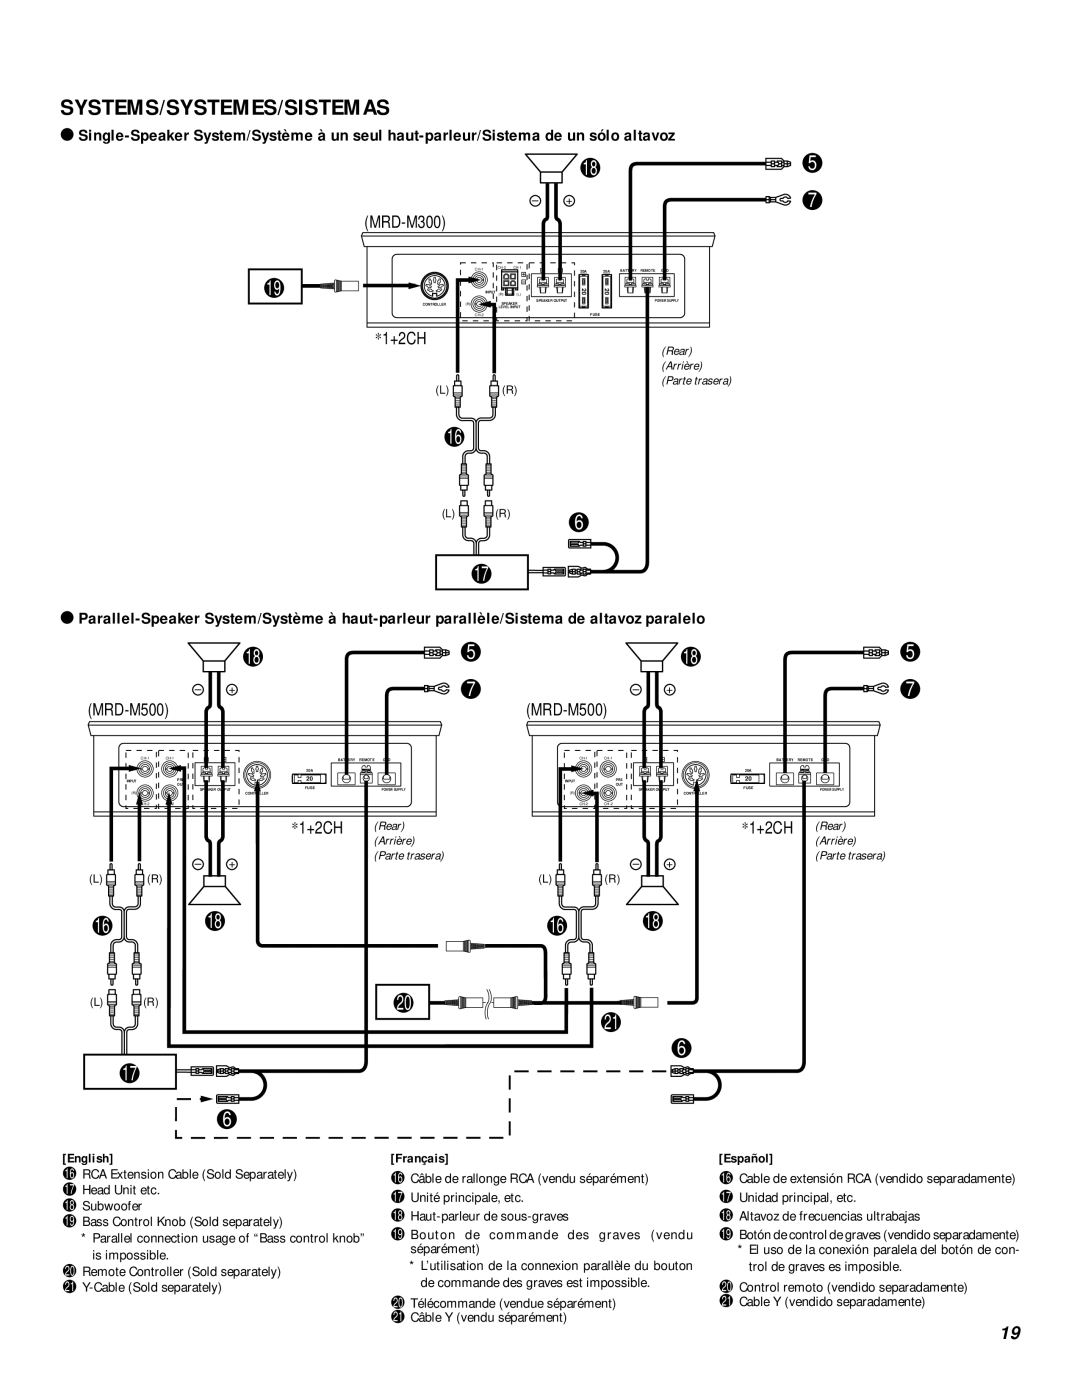 Alpine MRD-M300 owner manual Systems/Systemes/Sistemas, 1618, MRD-M500 